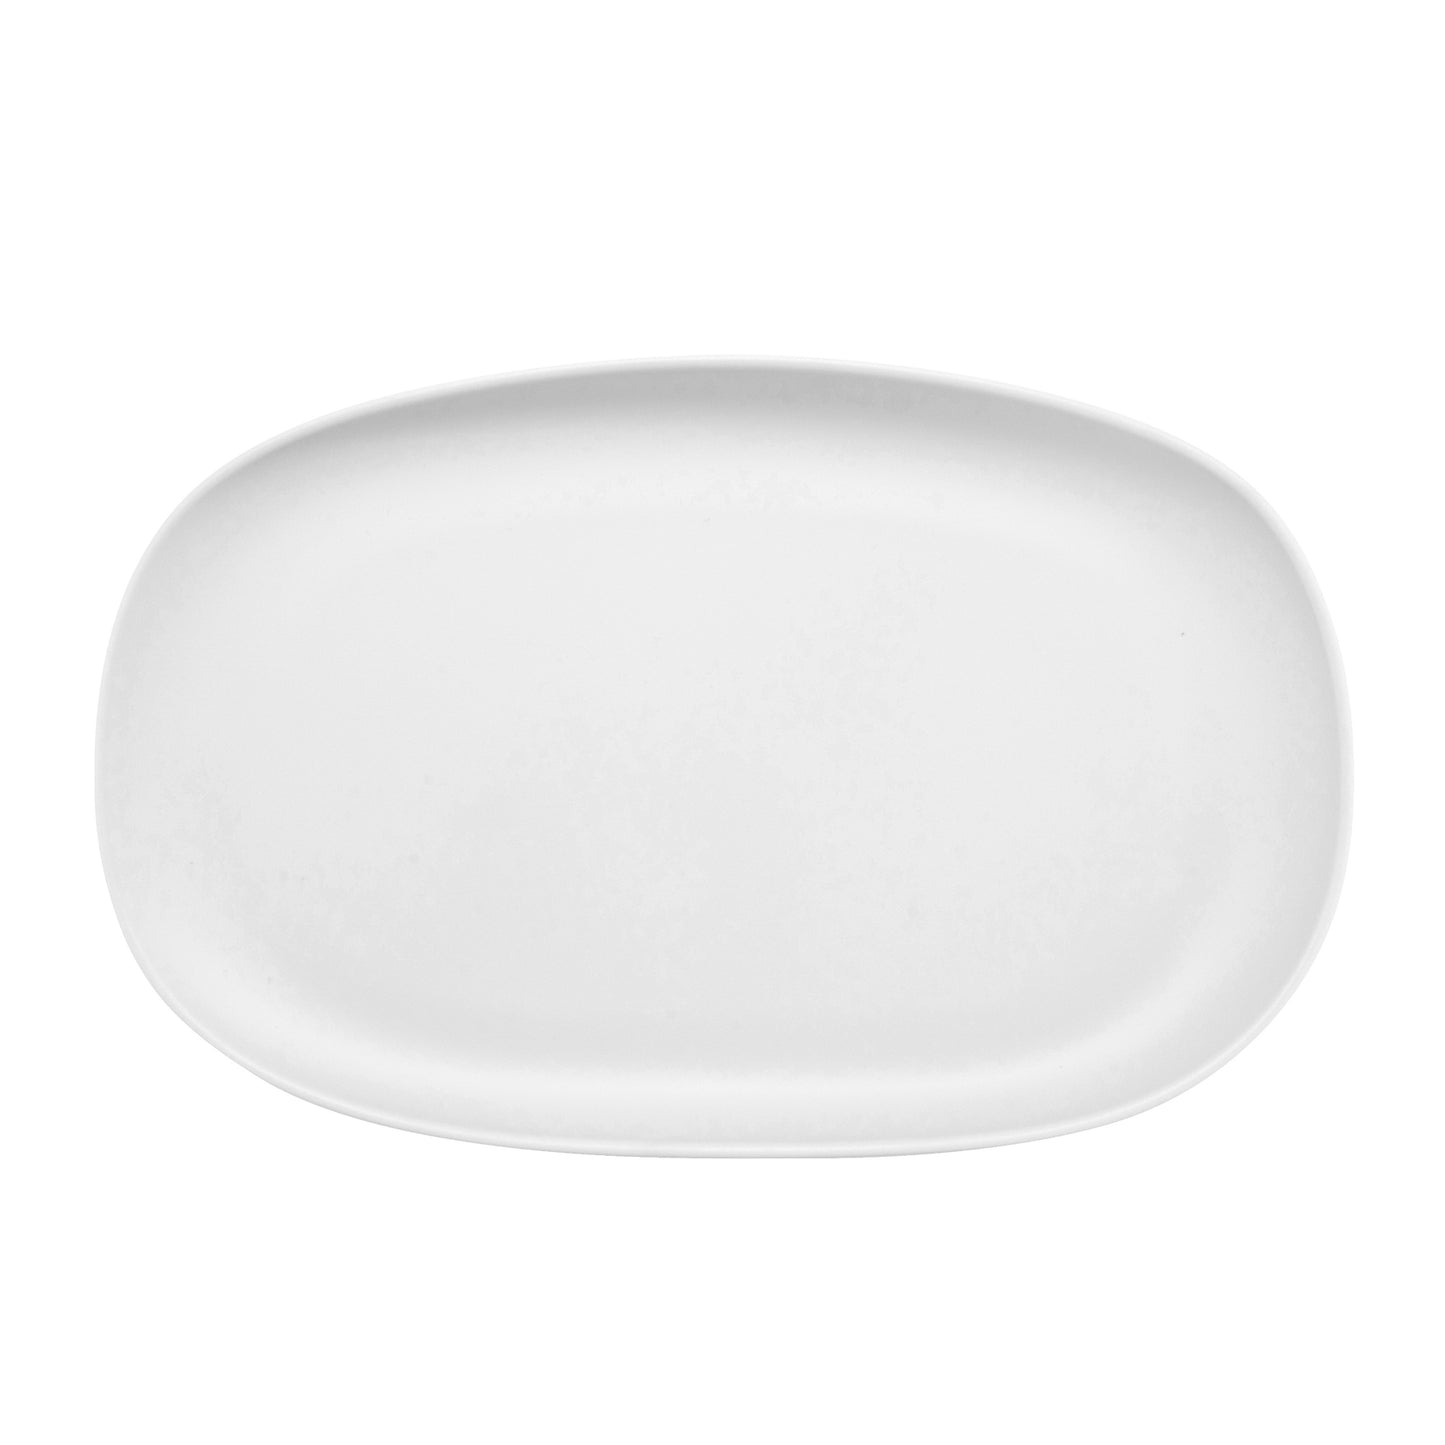 14" x 10" White, Melamine, Oval Coupe Platter, 1.24" H, G.E.T. Riverstone (12 Pack)